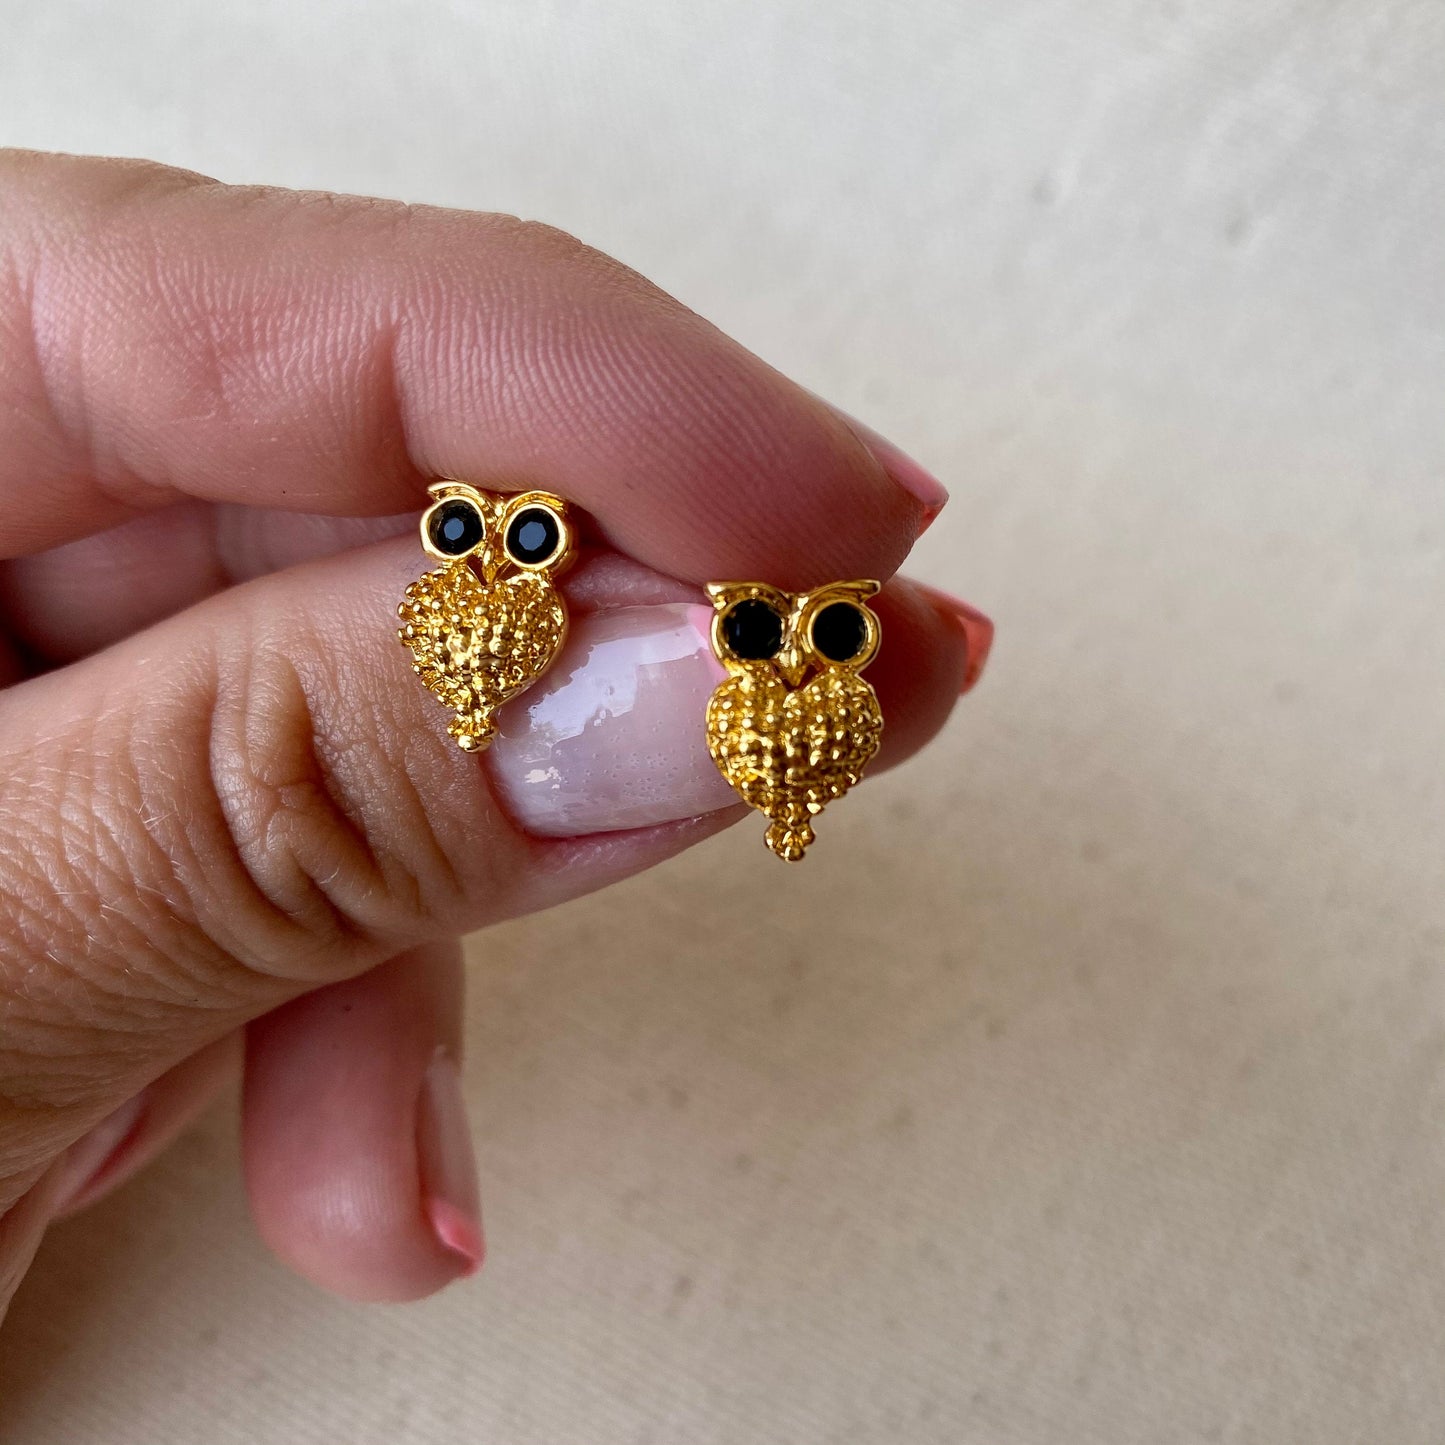 GoldFi 18k Gold Filled Owl Black Crystal Eyes Stud Earrings